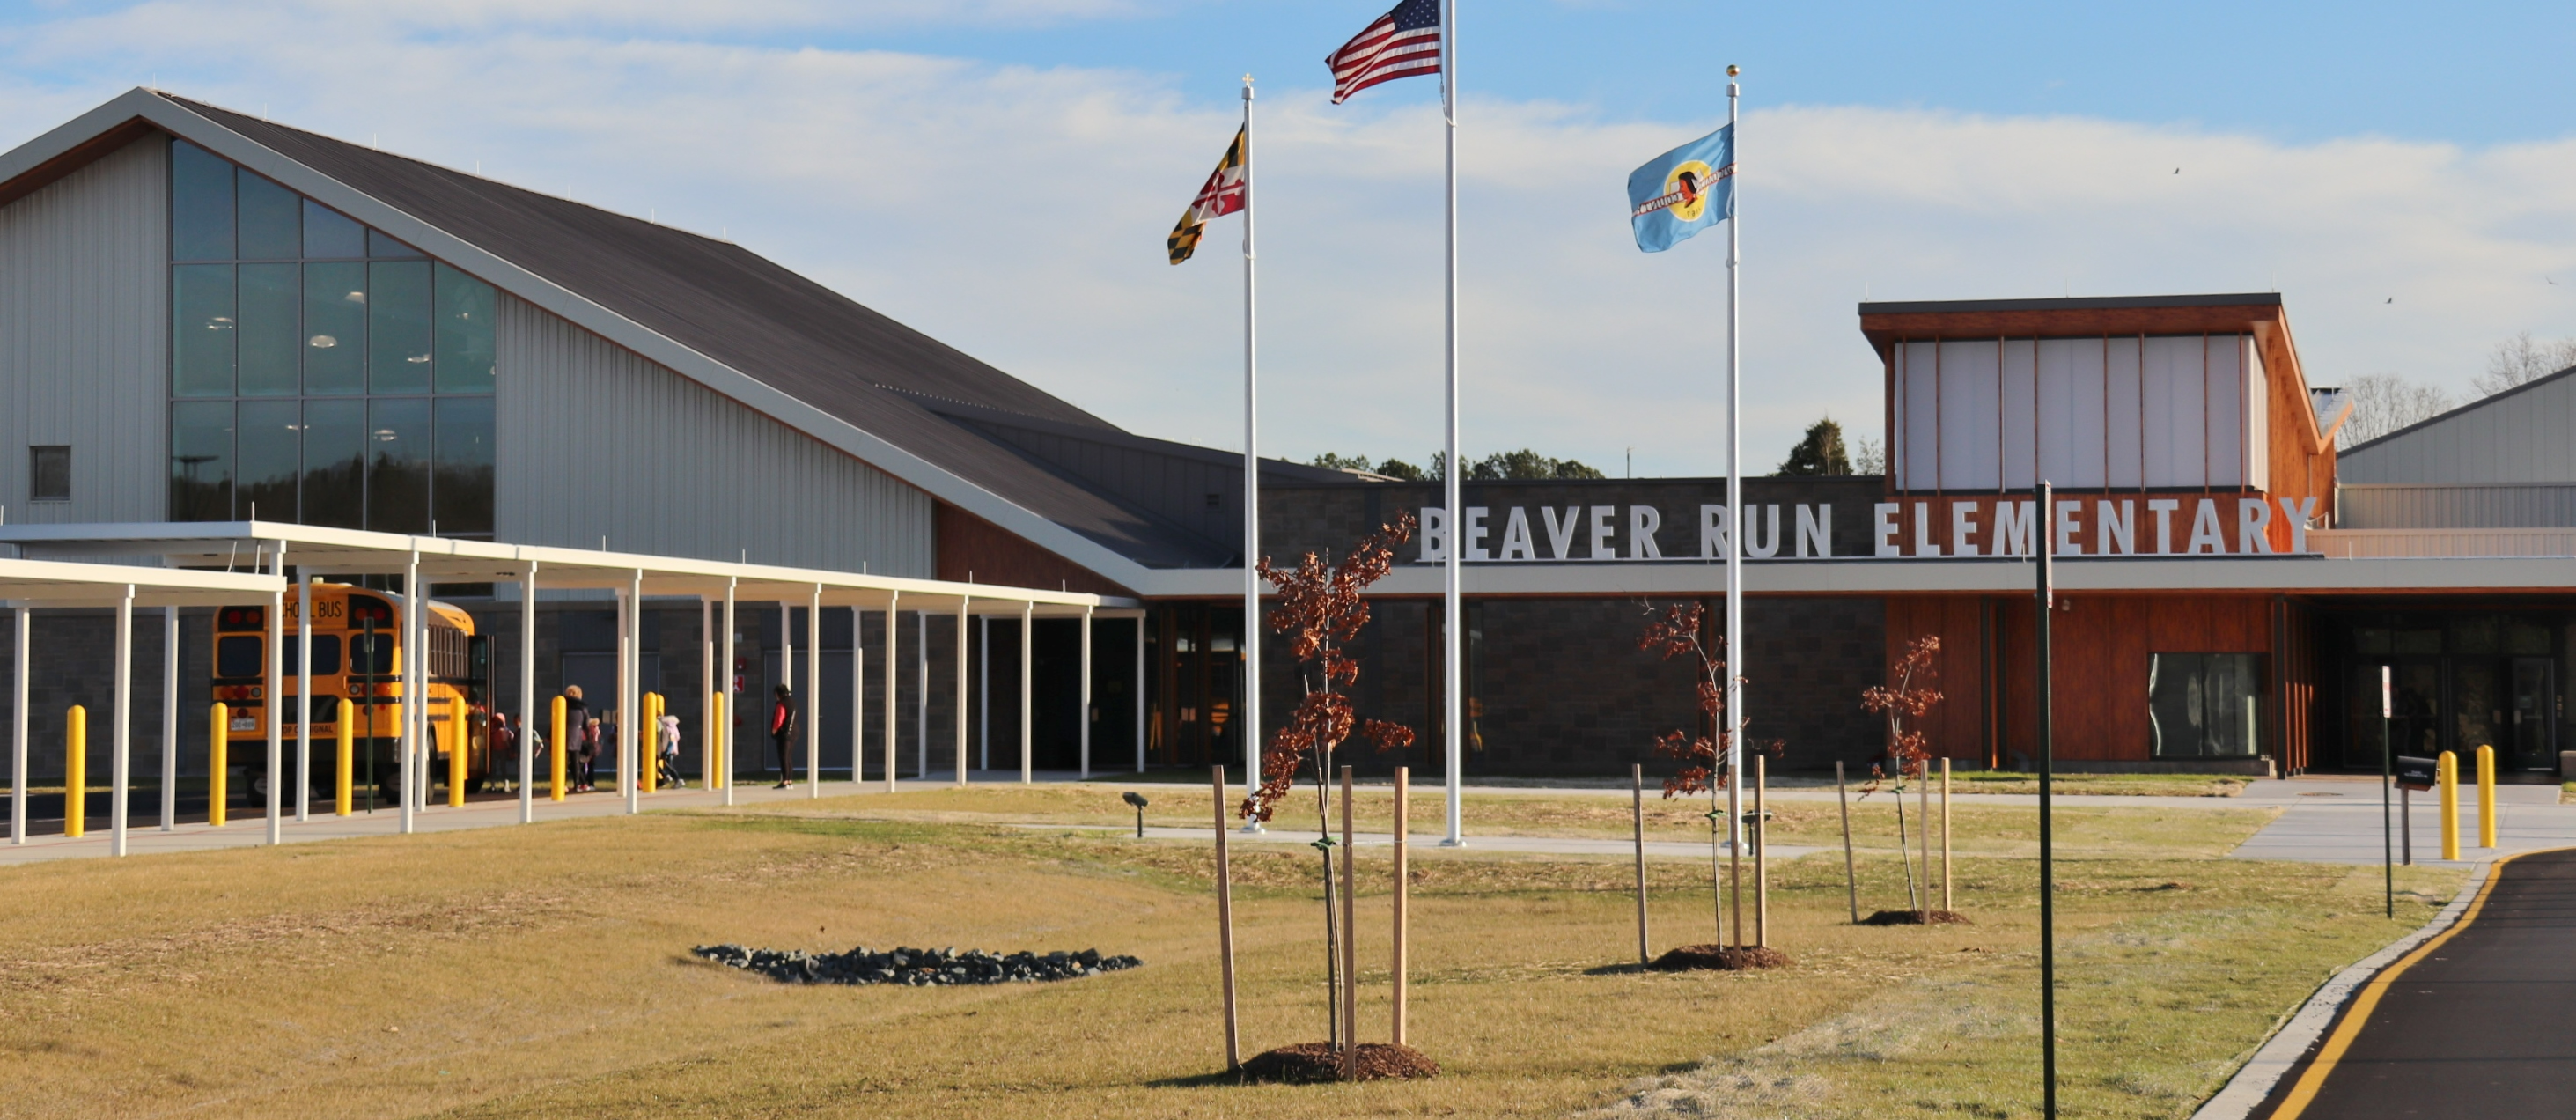 Beaver Run Elementary School